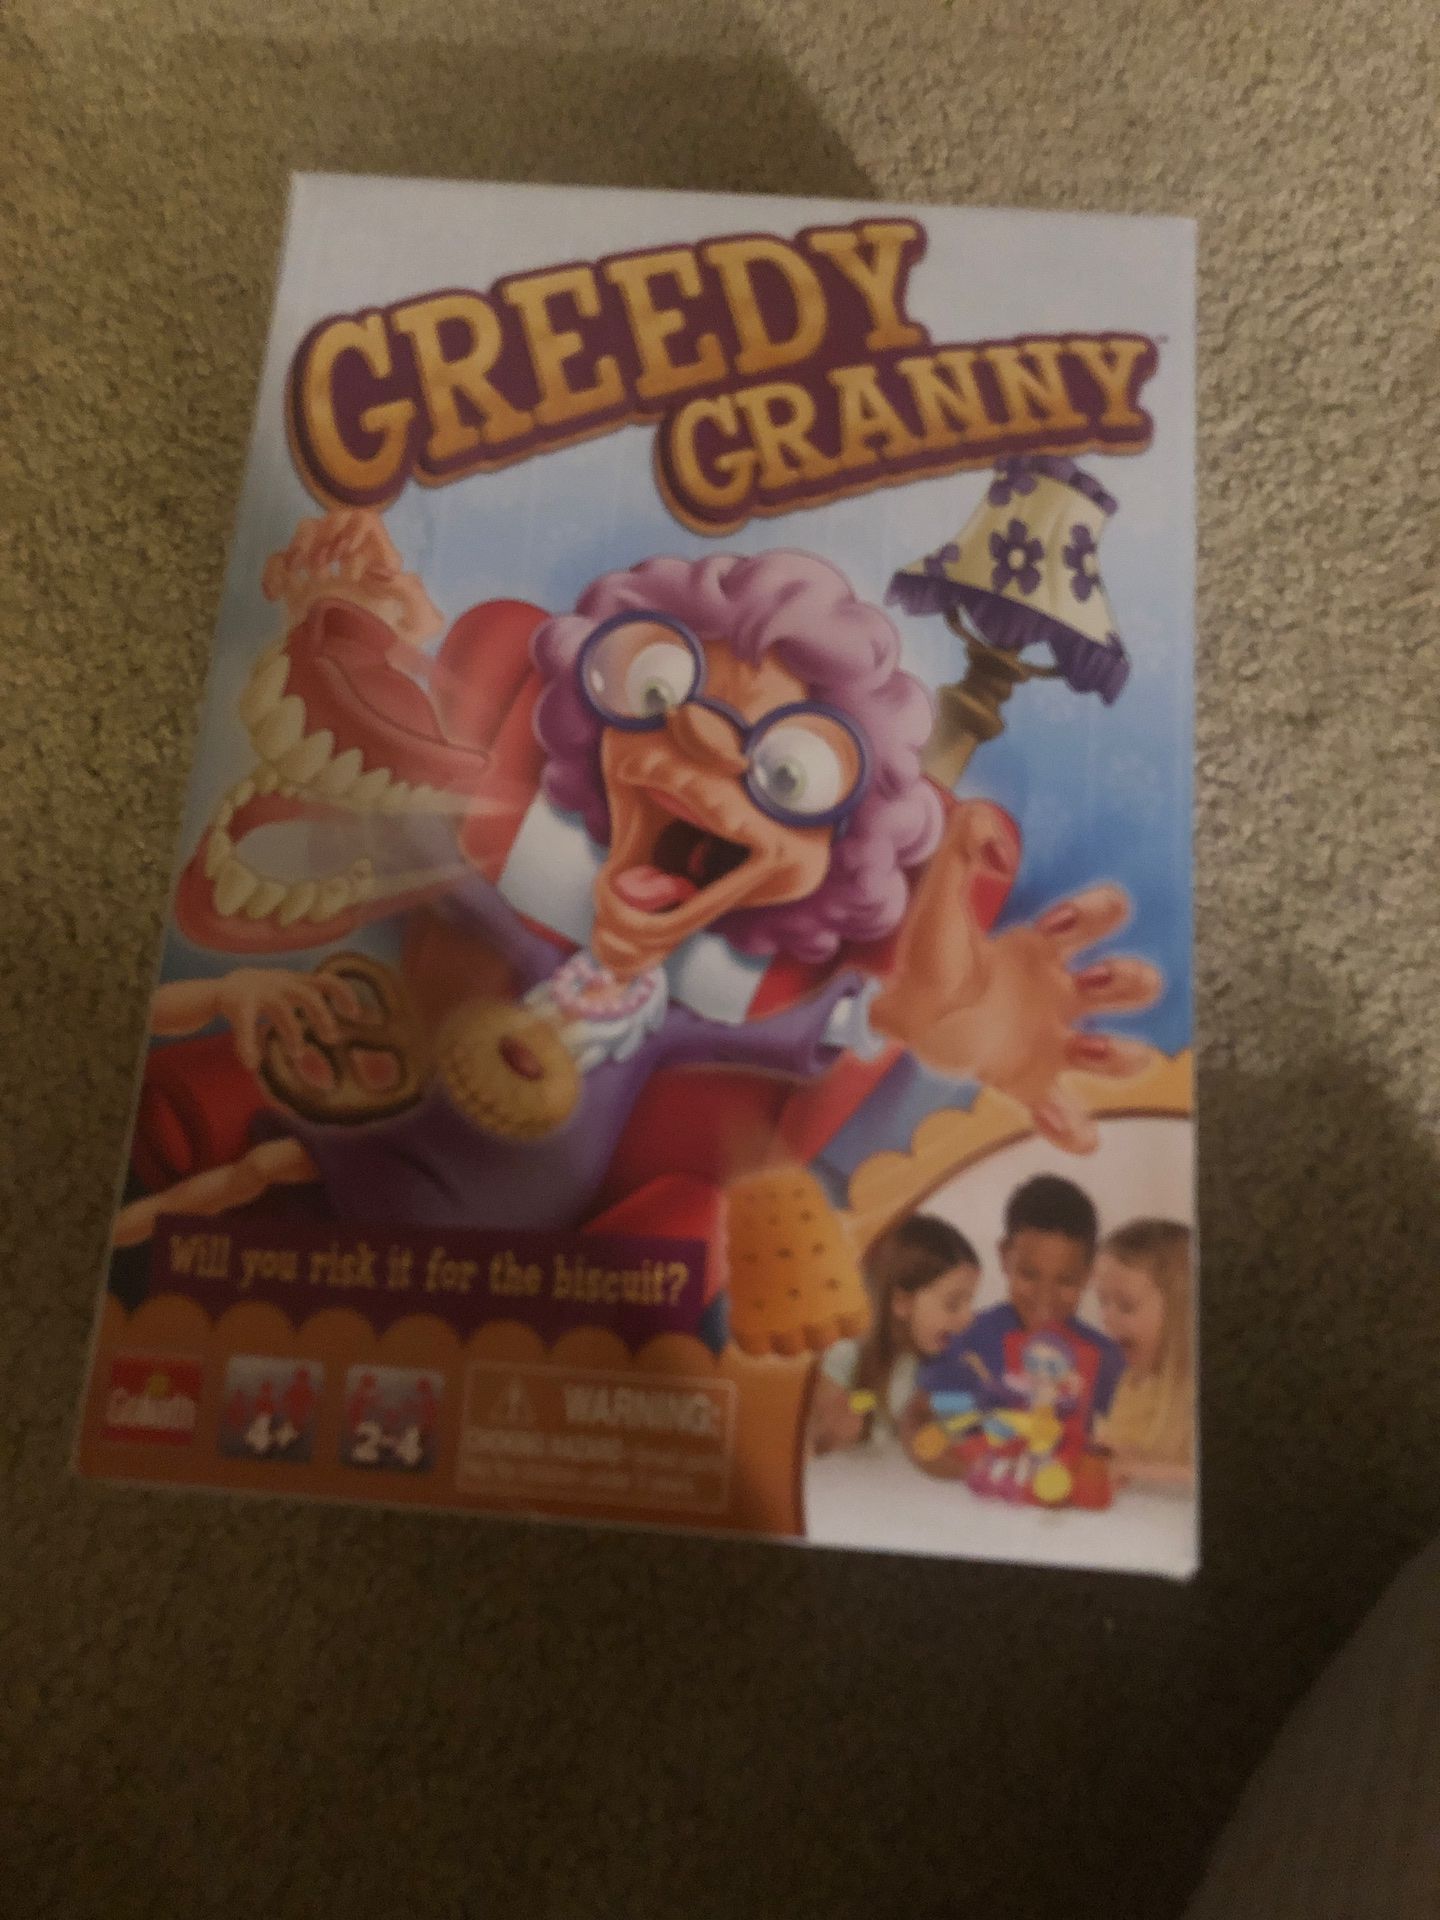 Greedy Granny game